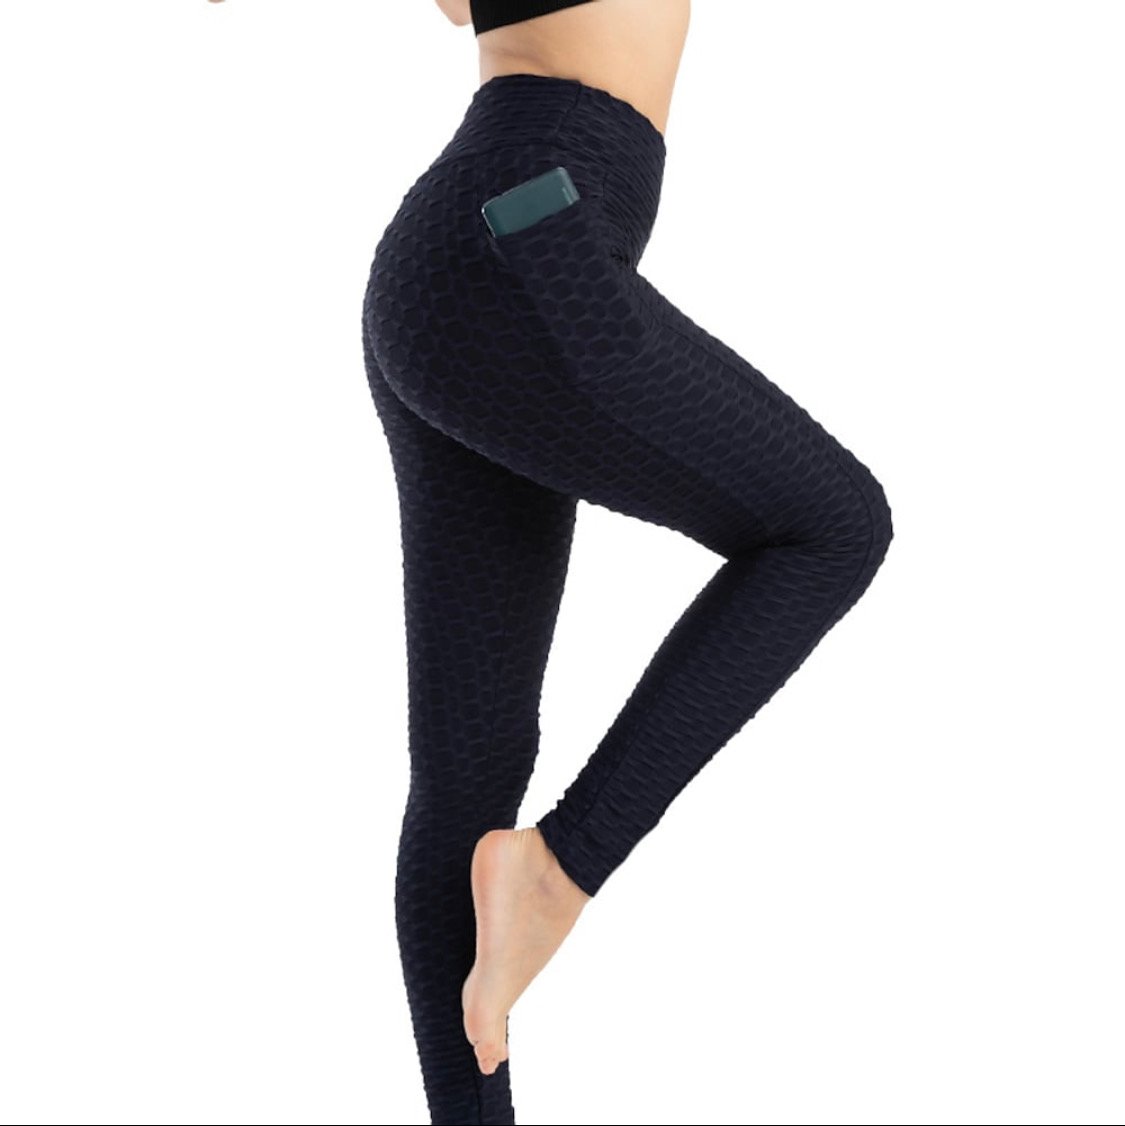 Anti cellulite slimming shapewear leggings Tourmaline high waist | eBay